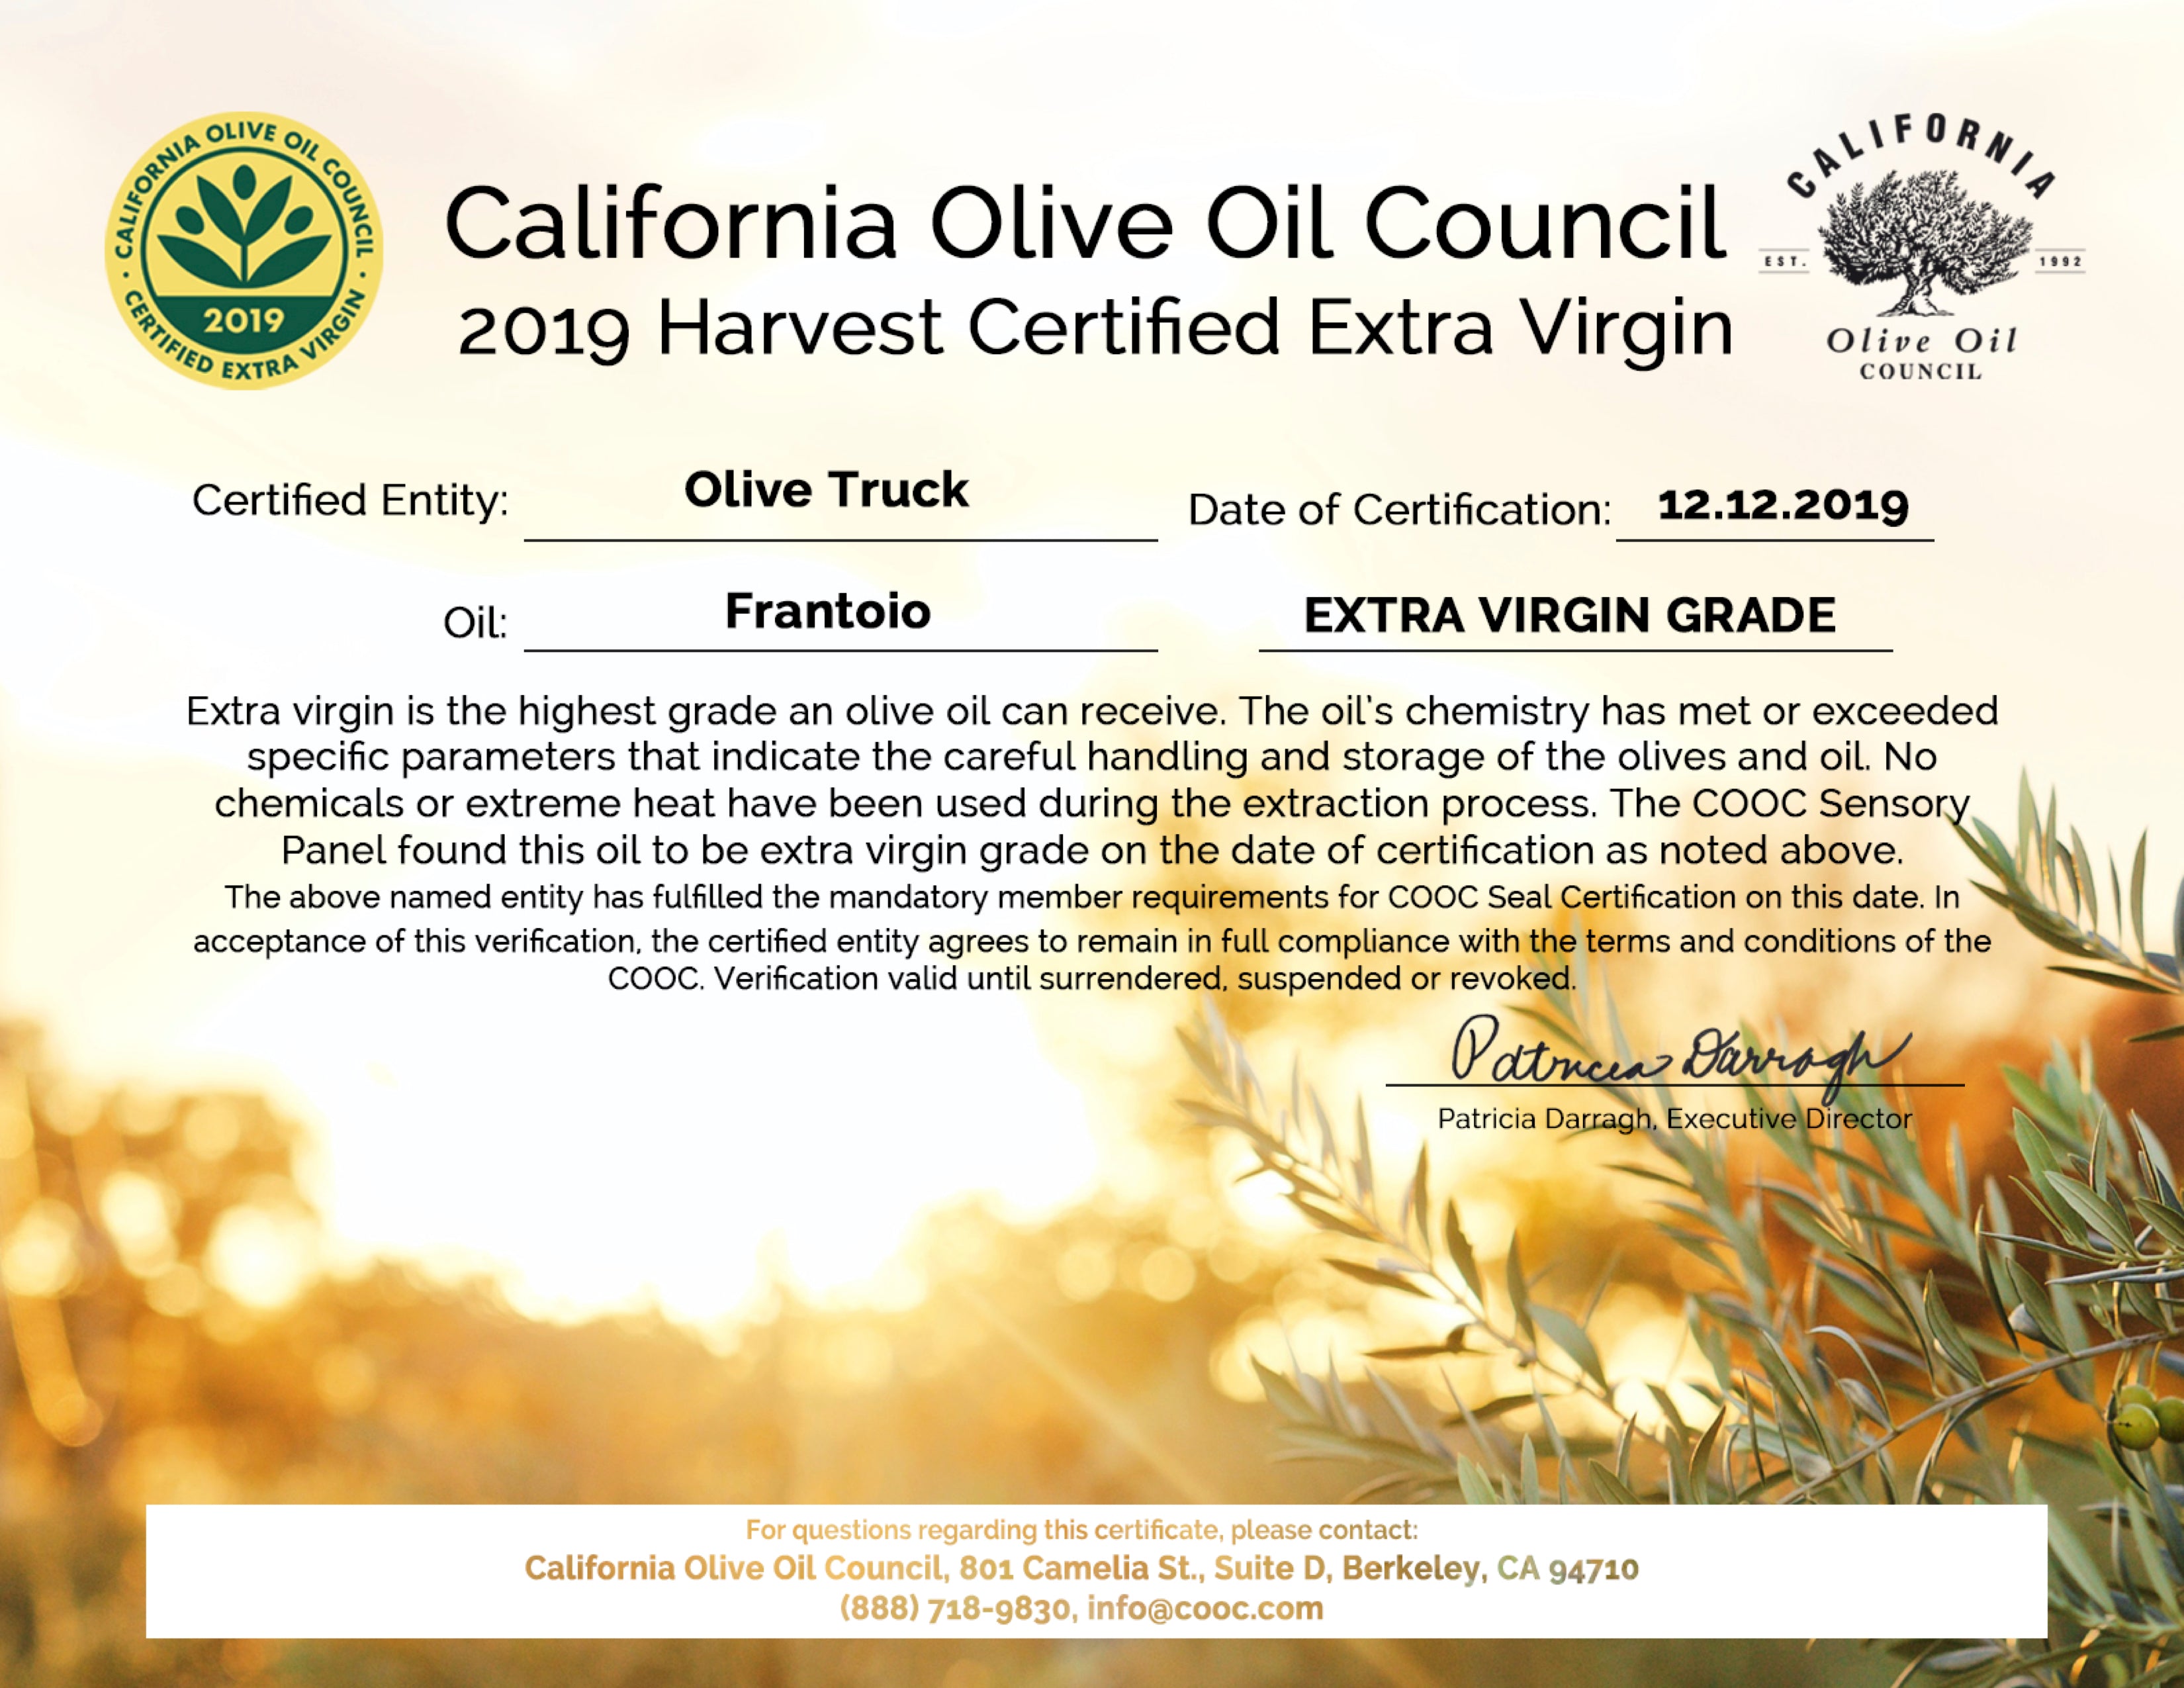 Frantoio - California Olive Oil Council, 2019 Harvest Certified Extra Virgin